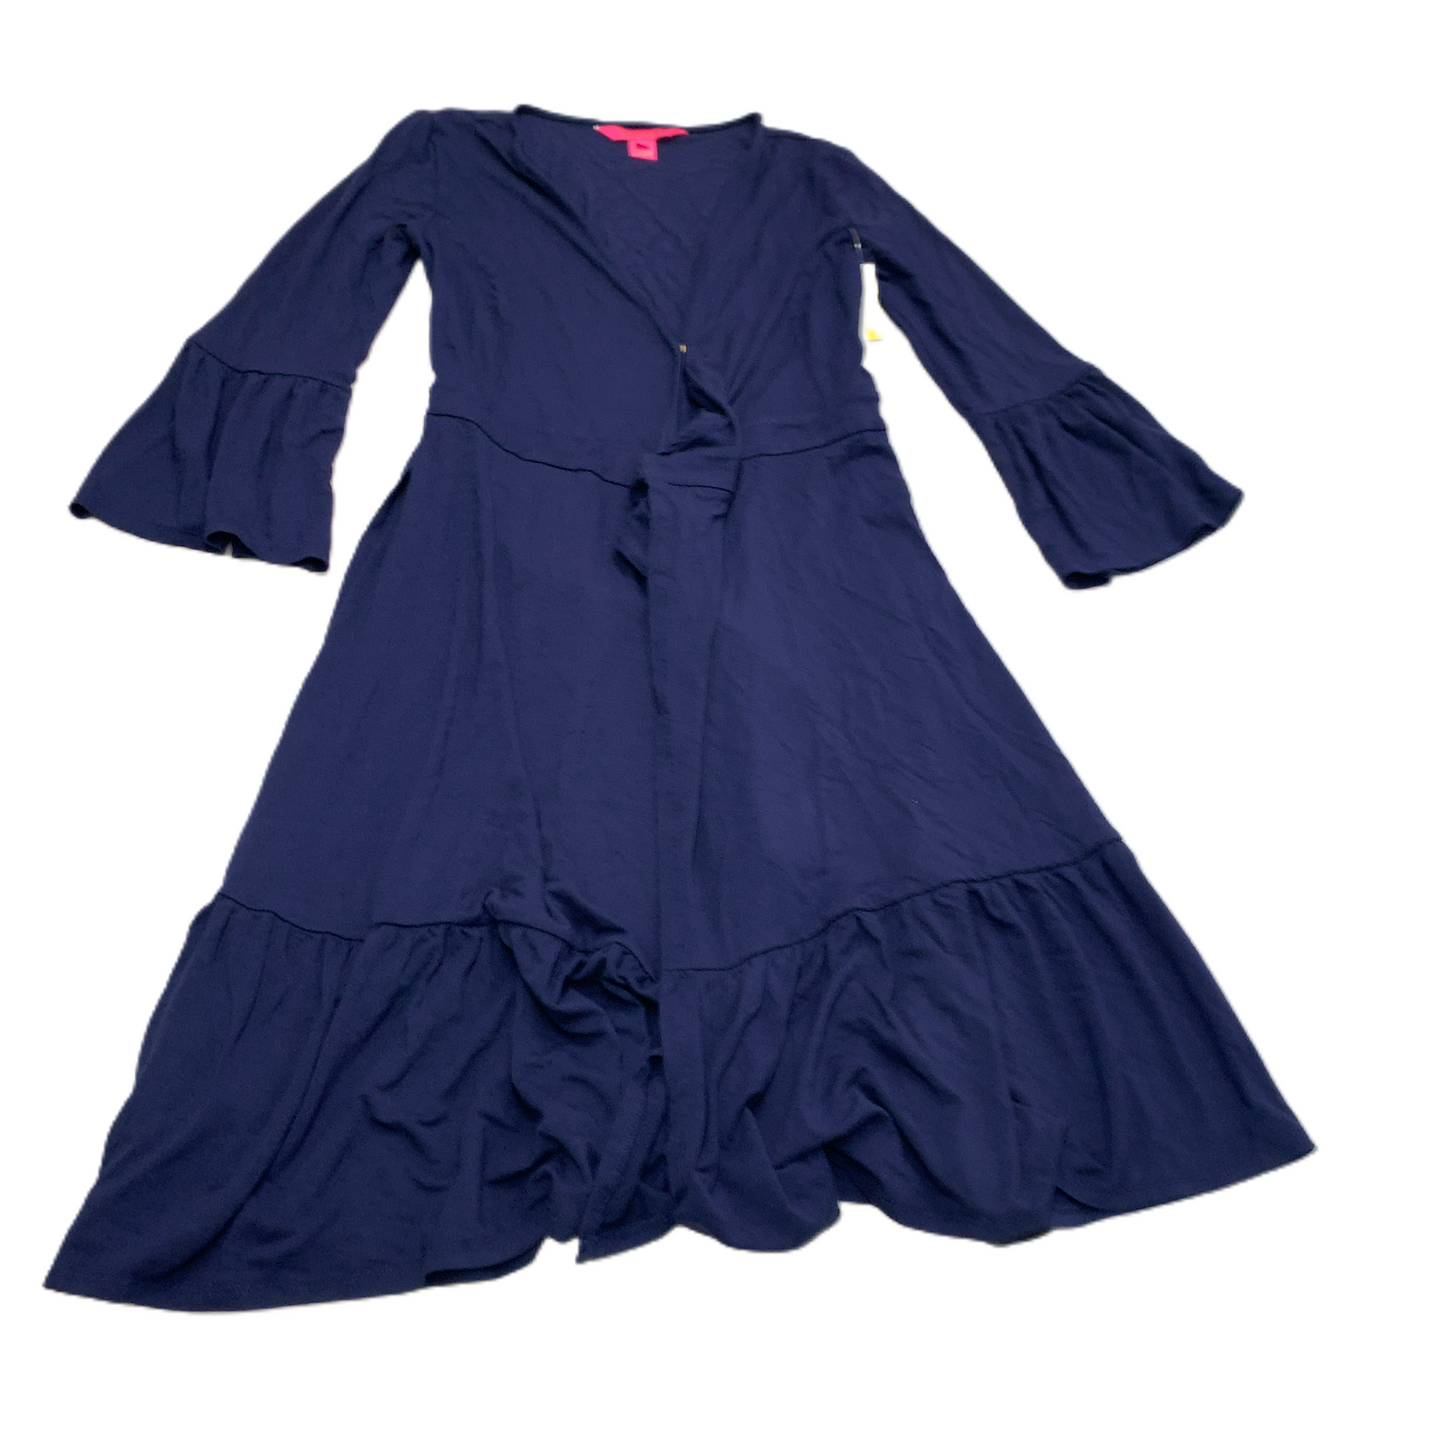 Blue  Dress Designer By Lilly Pulitzer  Size: Xxs